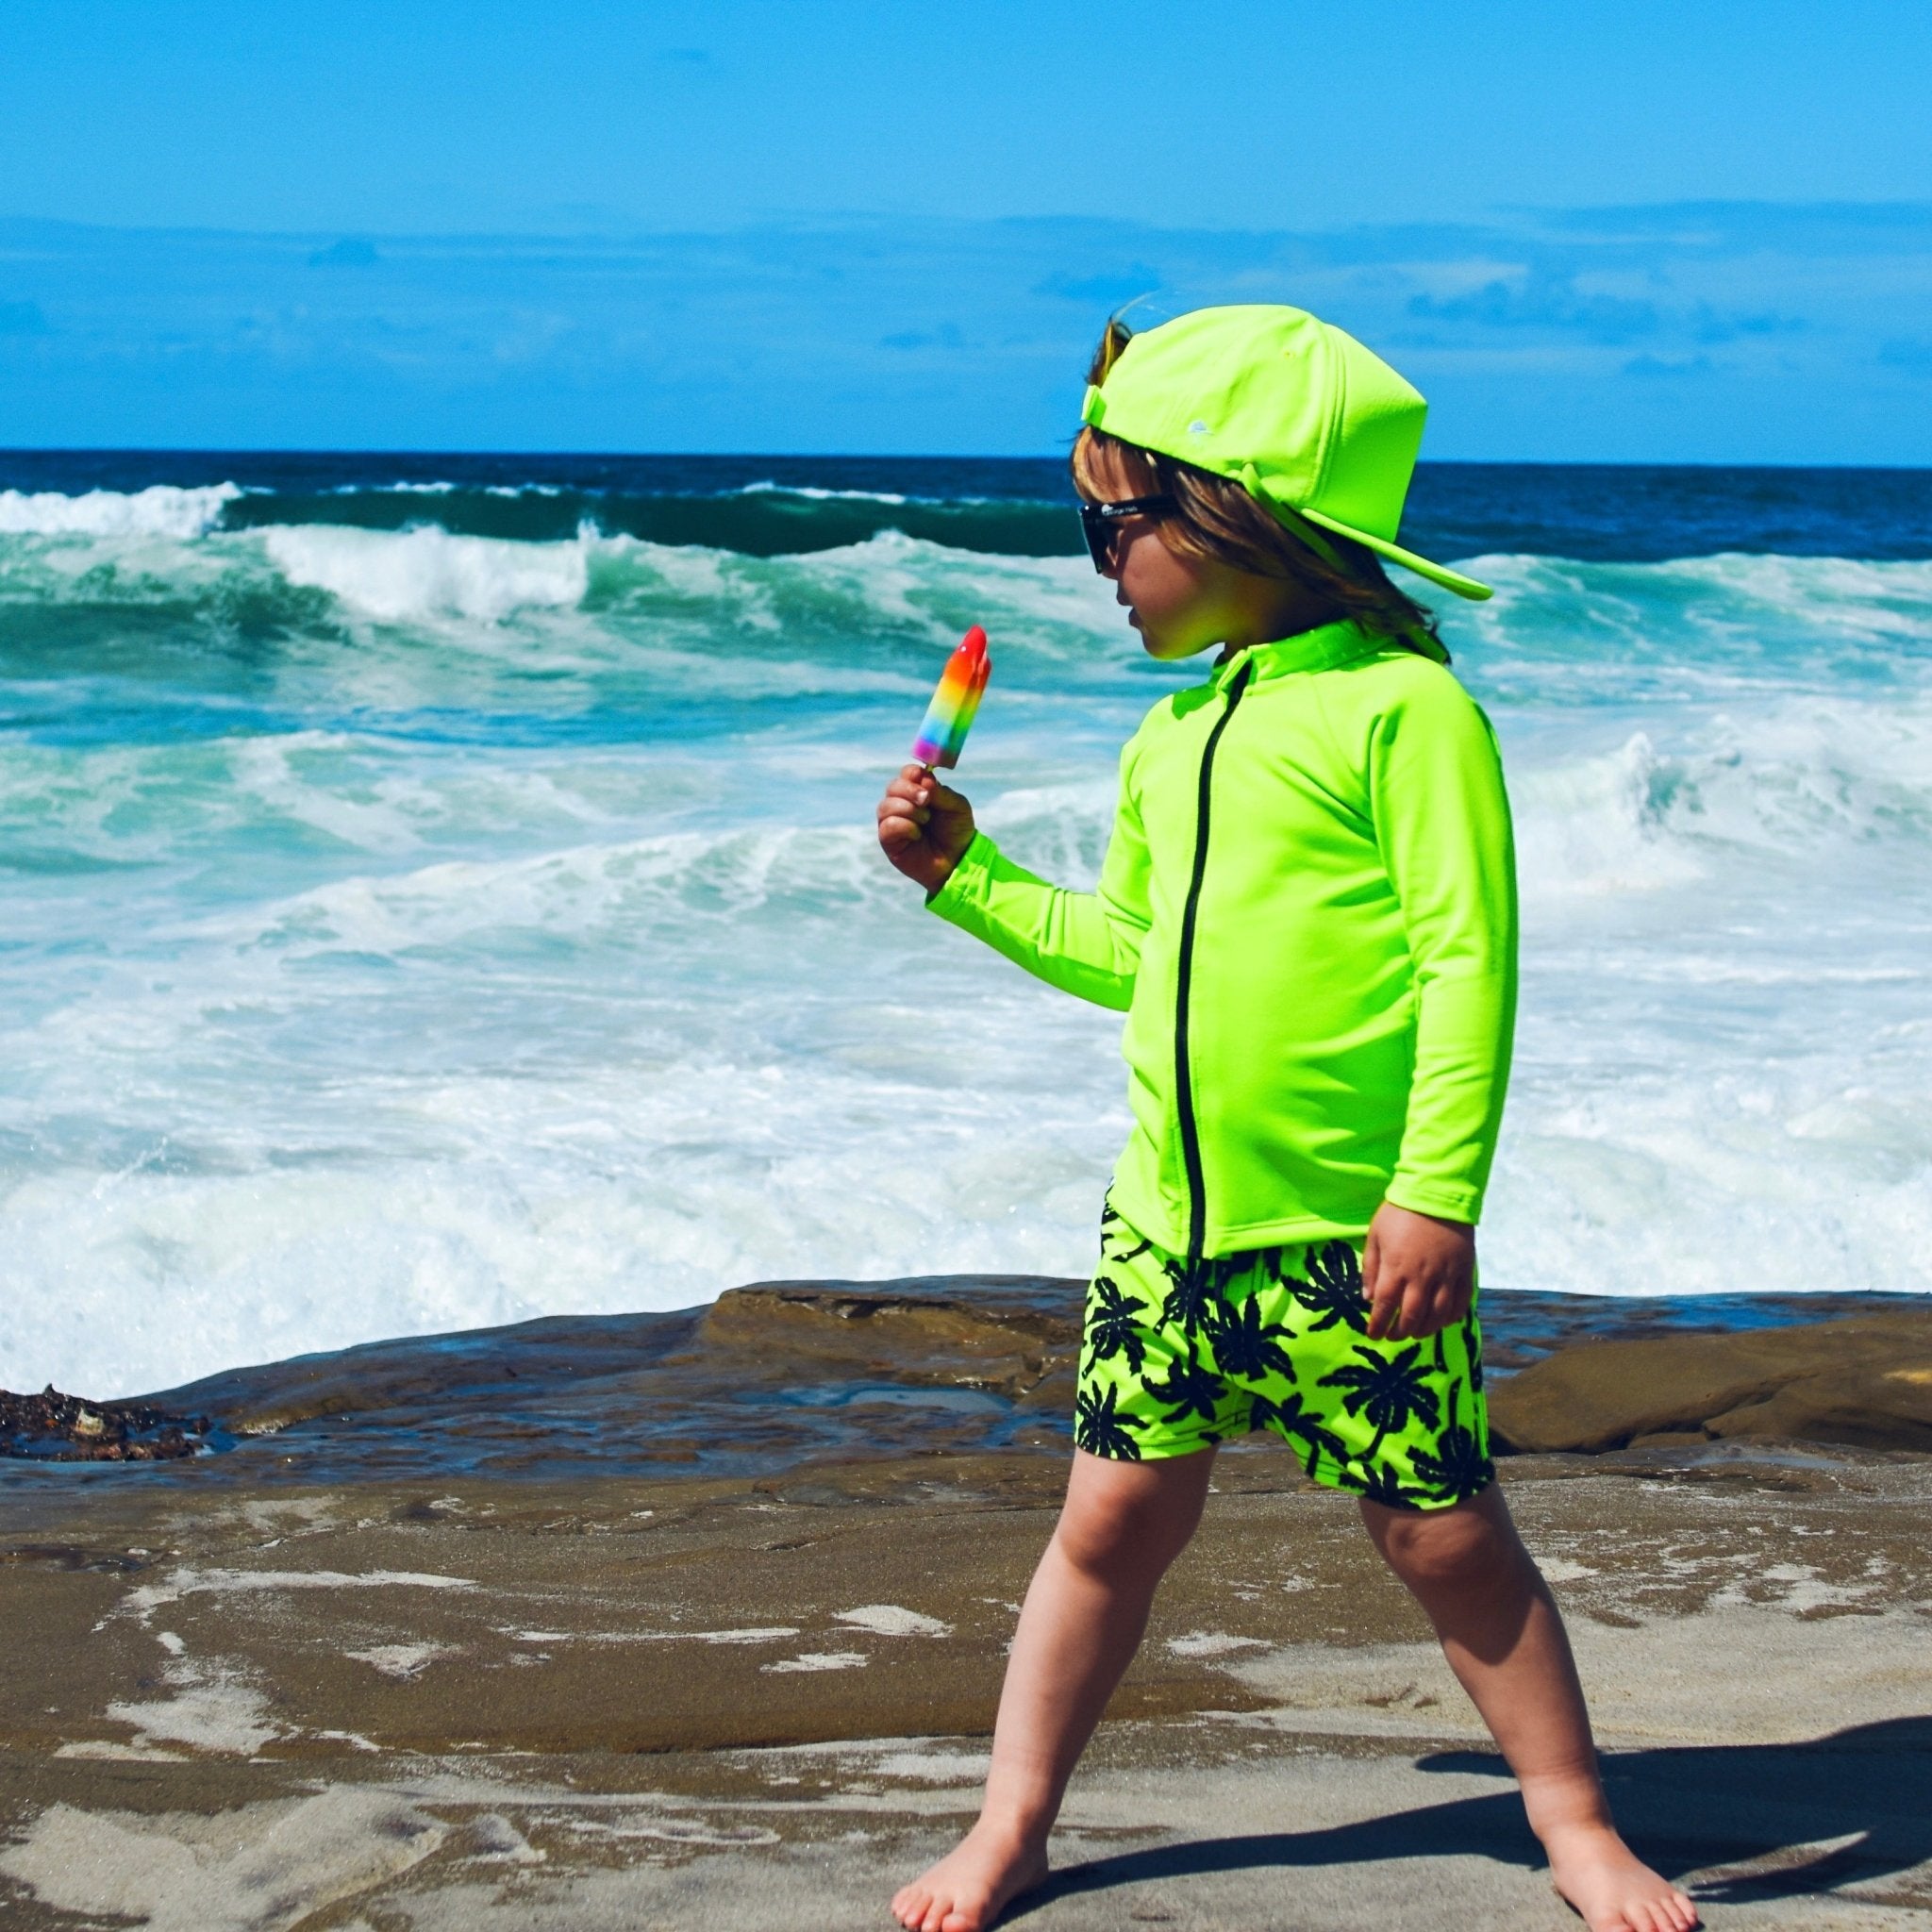 Neon Palm Hybrid Swim Shorts - George Hats